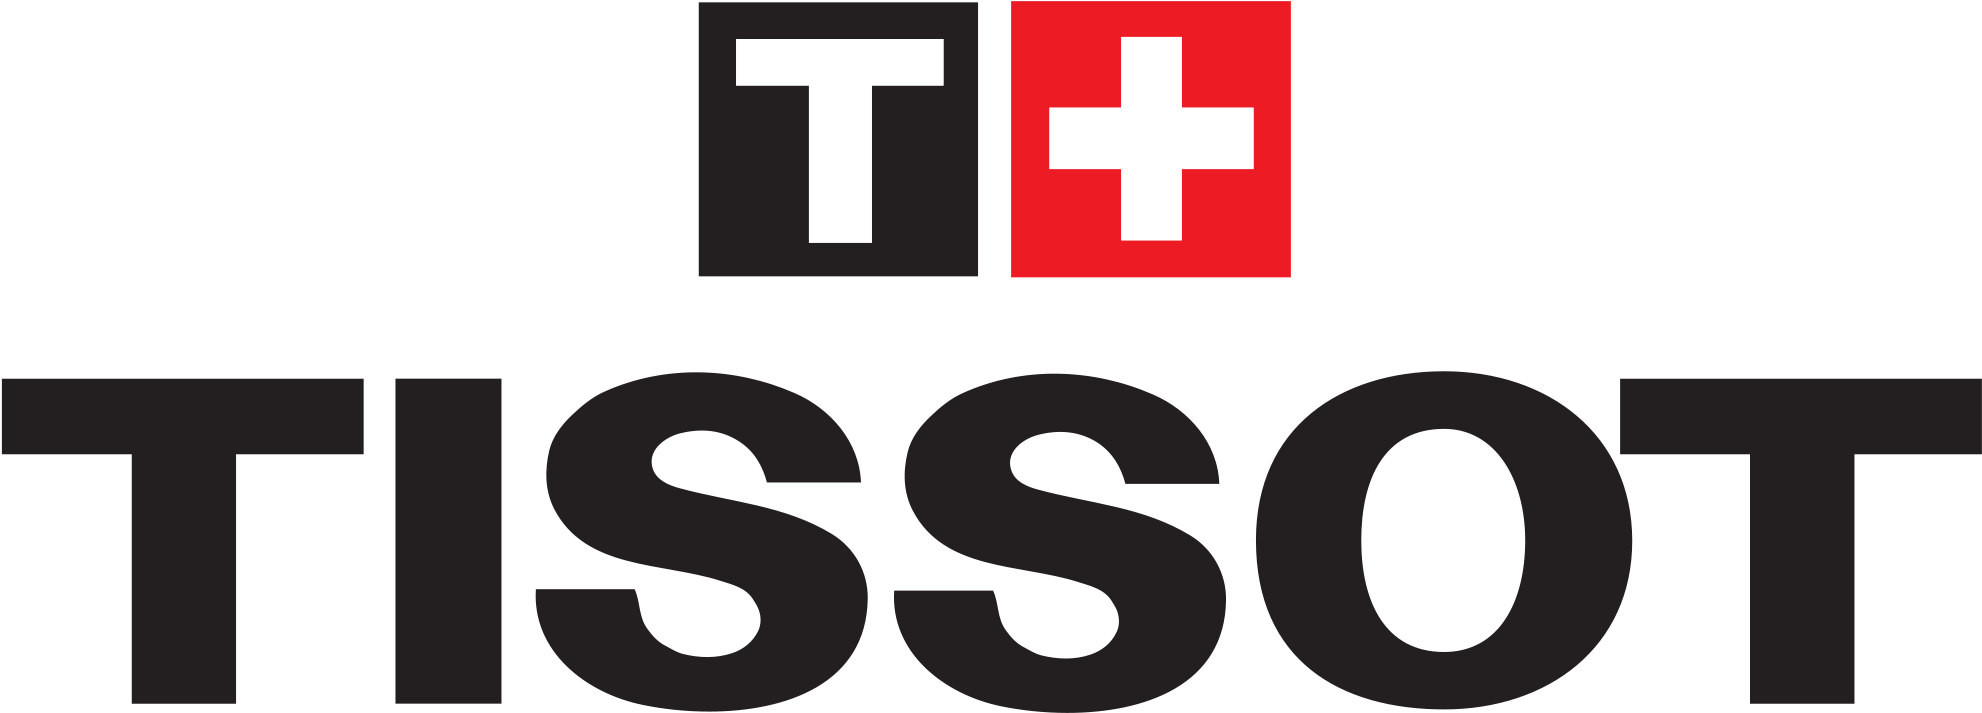 Official Tissot Retailer For Manitoba - Tissot Watches Logo (2000x733)